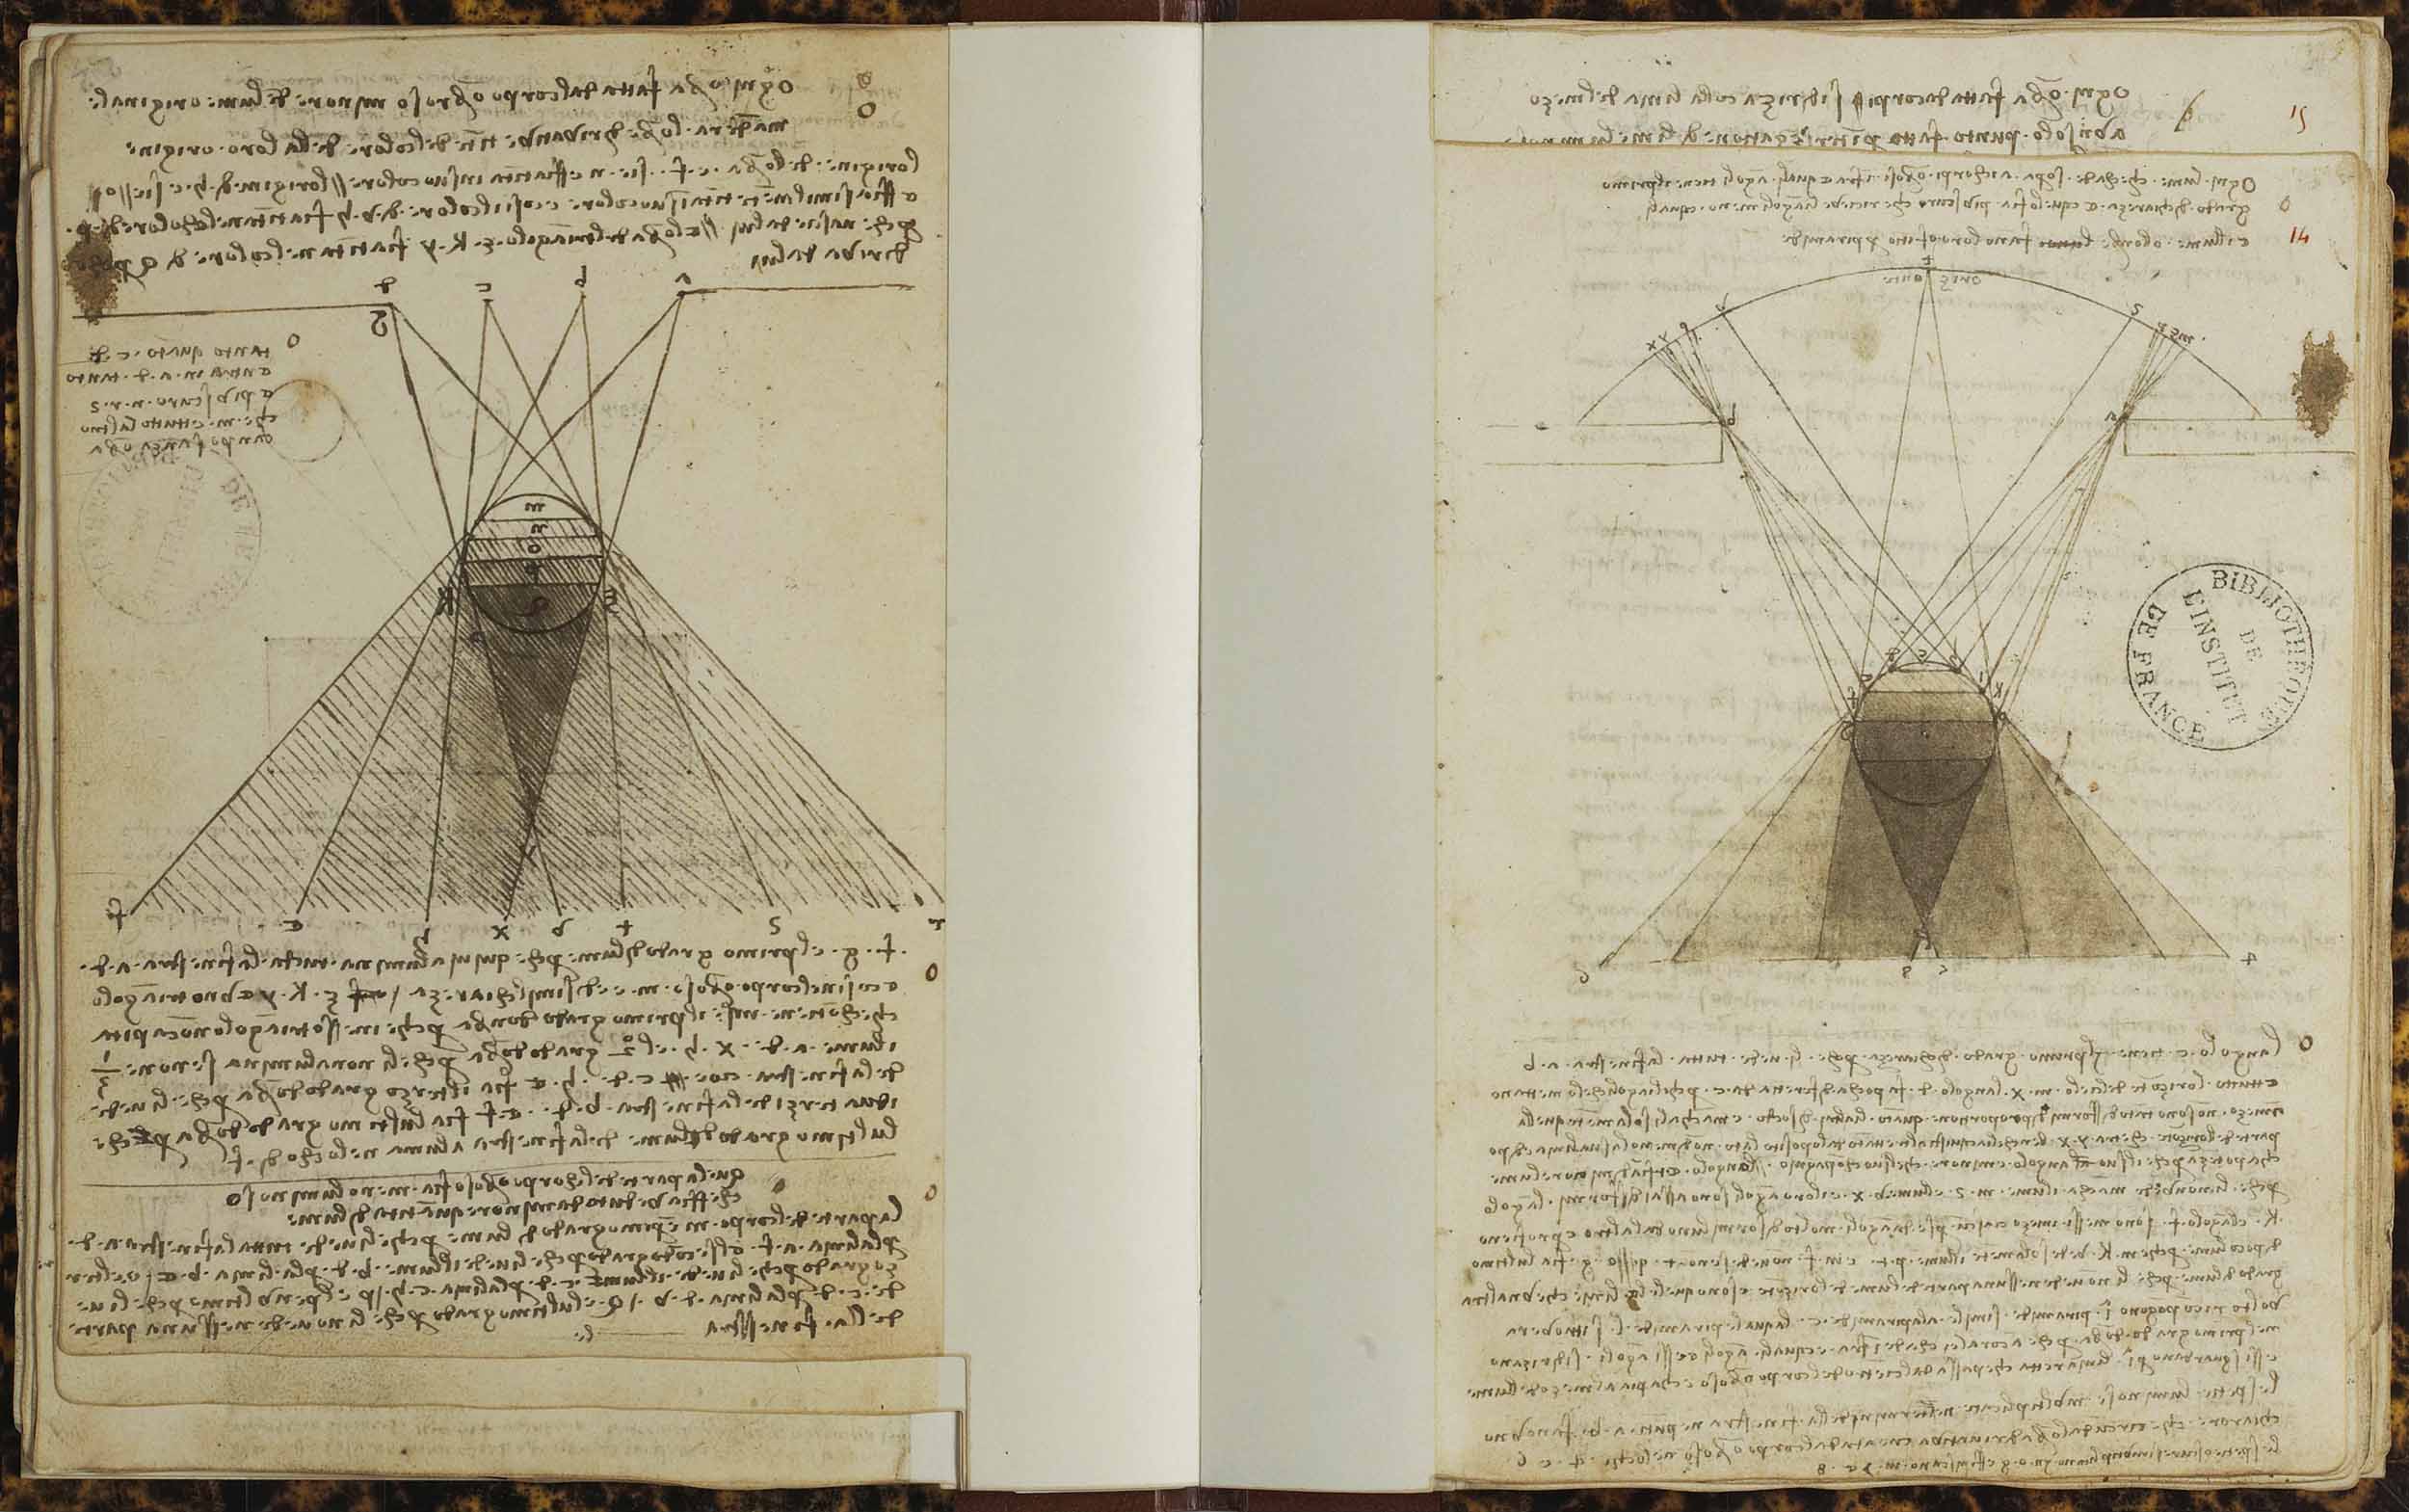 Shadow Drawings from Leonardo da Vinci’s notebook